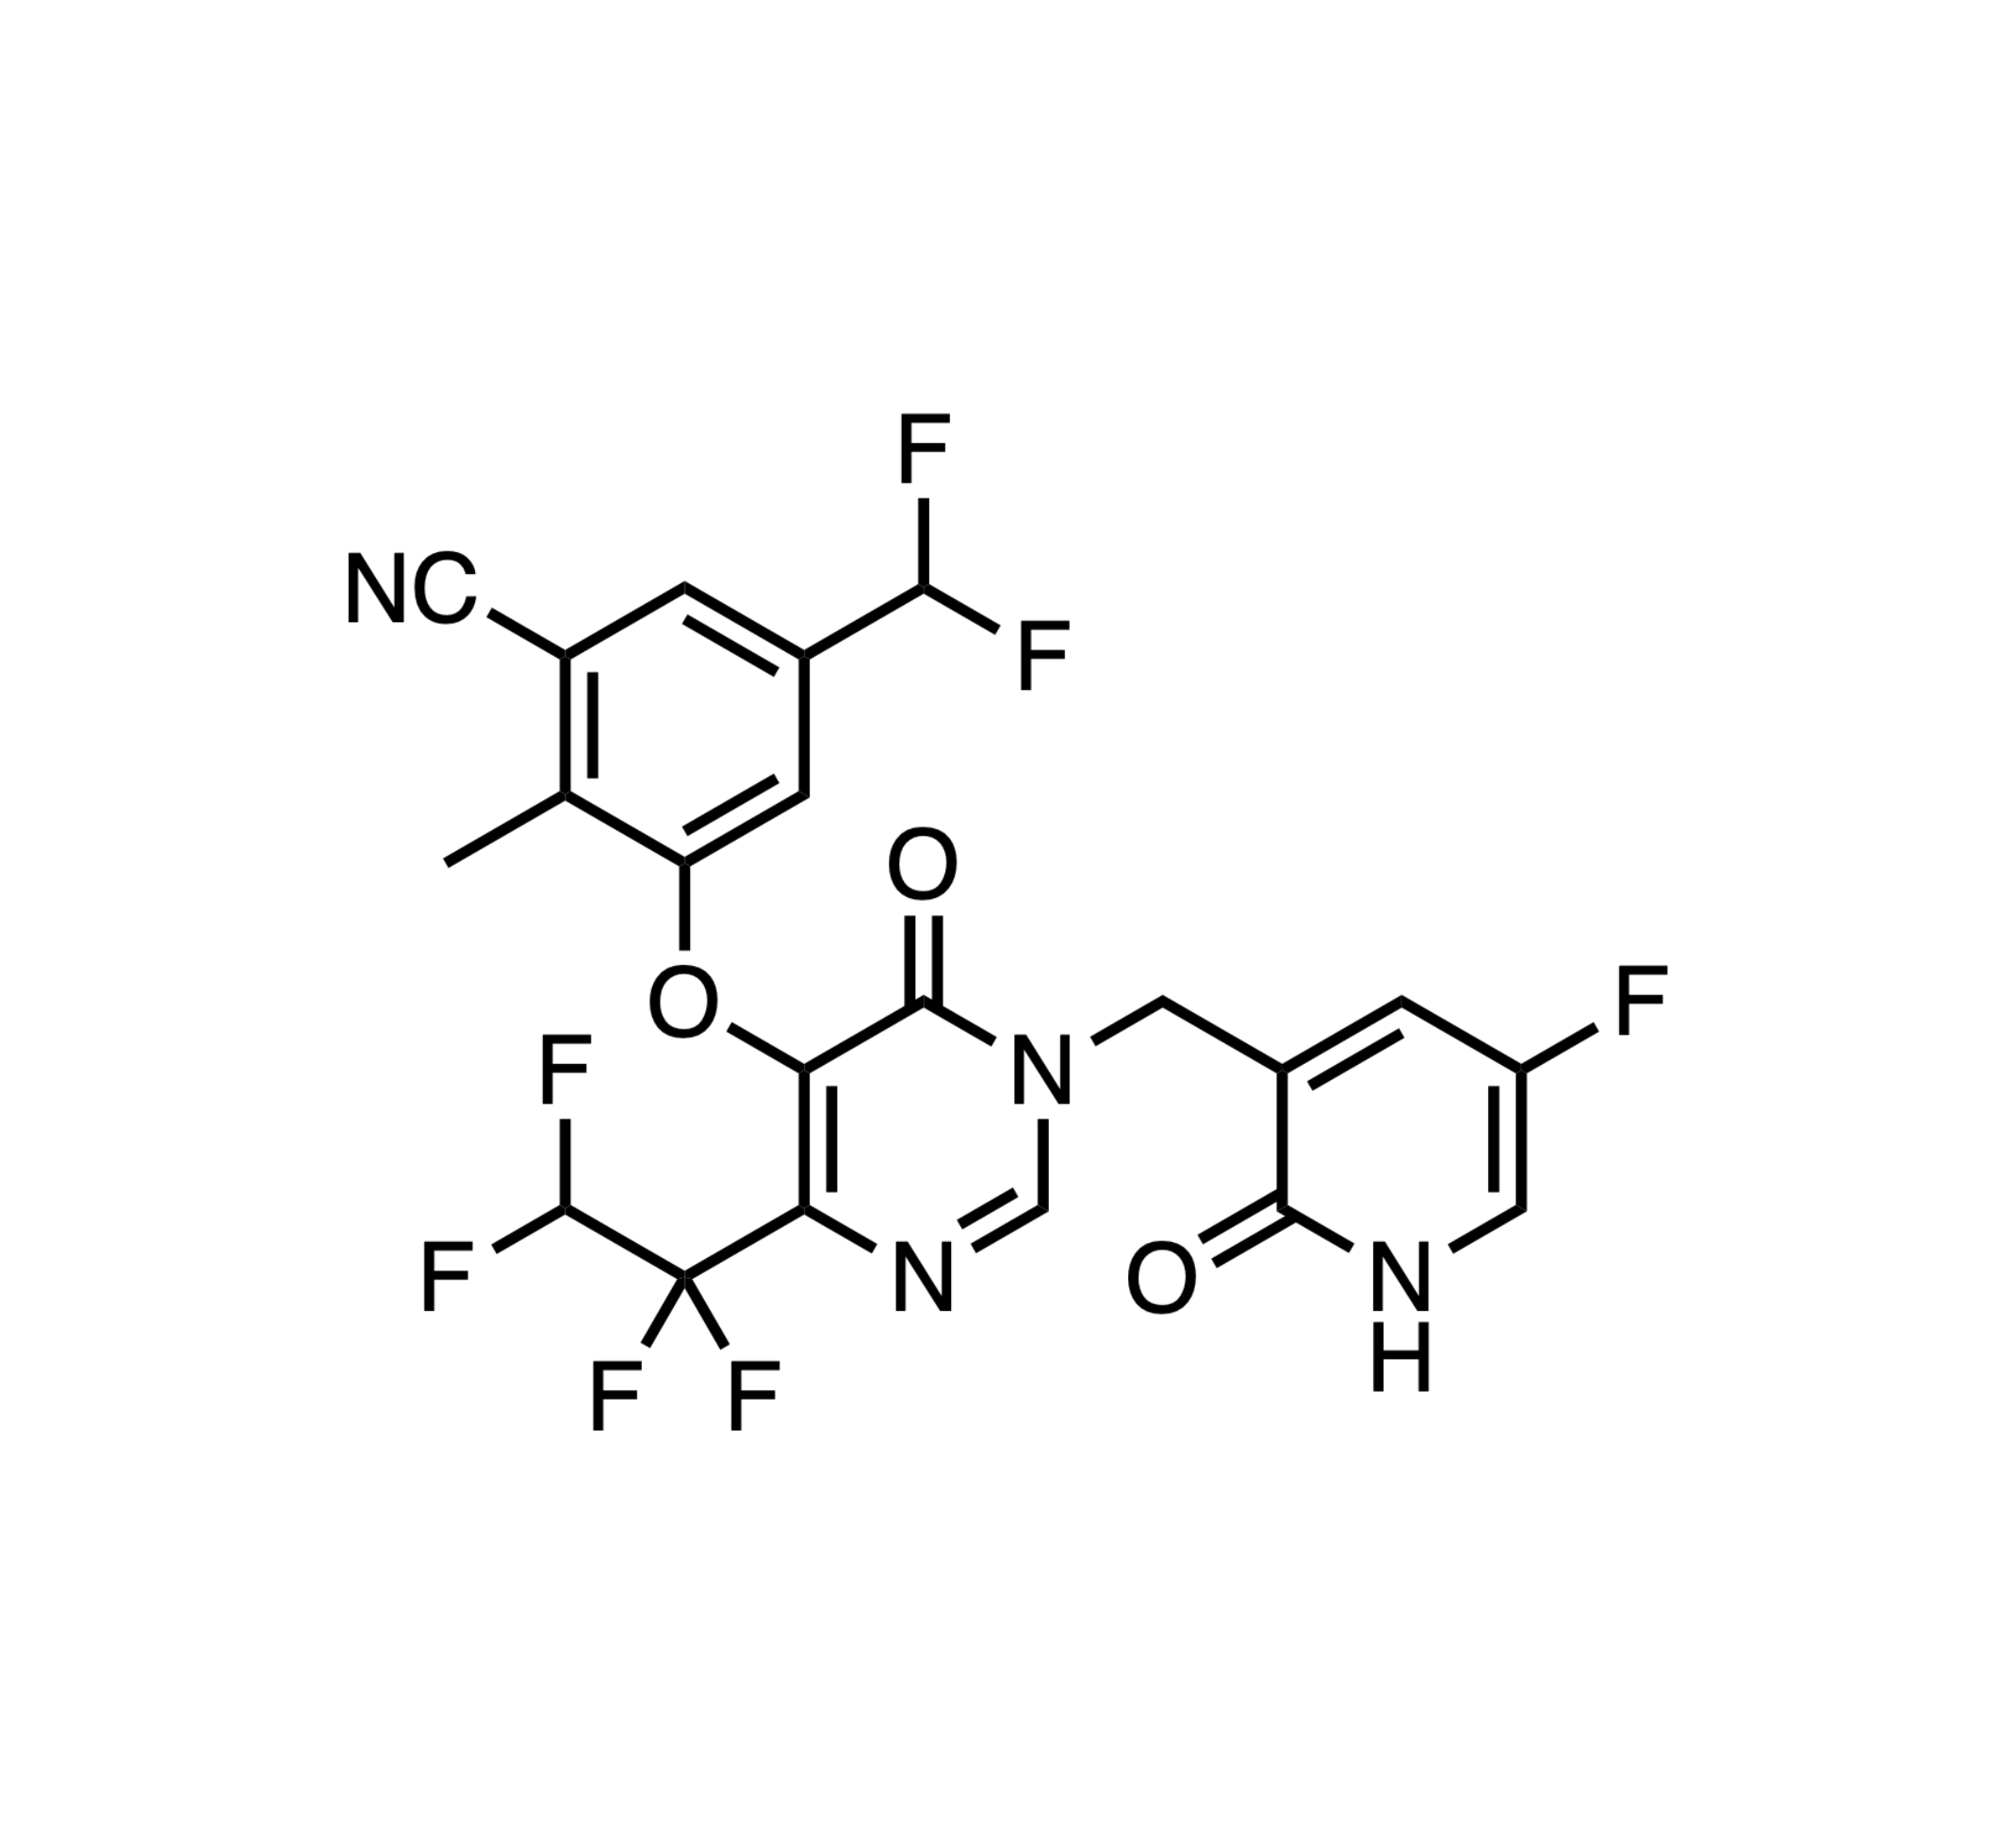 PYR02, bifunctional, Gag-Pol allosteric glue, NNRTI + nanomolar ex vivo HIV-1 TACK activity, MERCK & CO. INC., RAHWAY, NJ|NNRTI, PYR01, PYR02, doravirine, efavirenz, nevirapine, rilpivirine, etravirine|NNRTI, PYR01, PYR02, etravirine, nevirapine, rilpivirine, efavirenz, doraviring